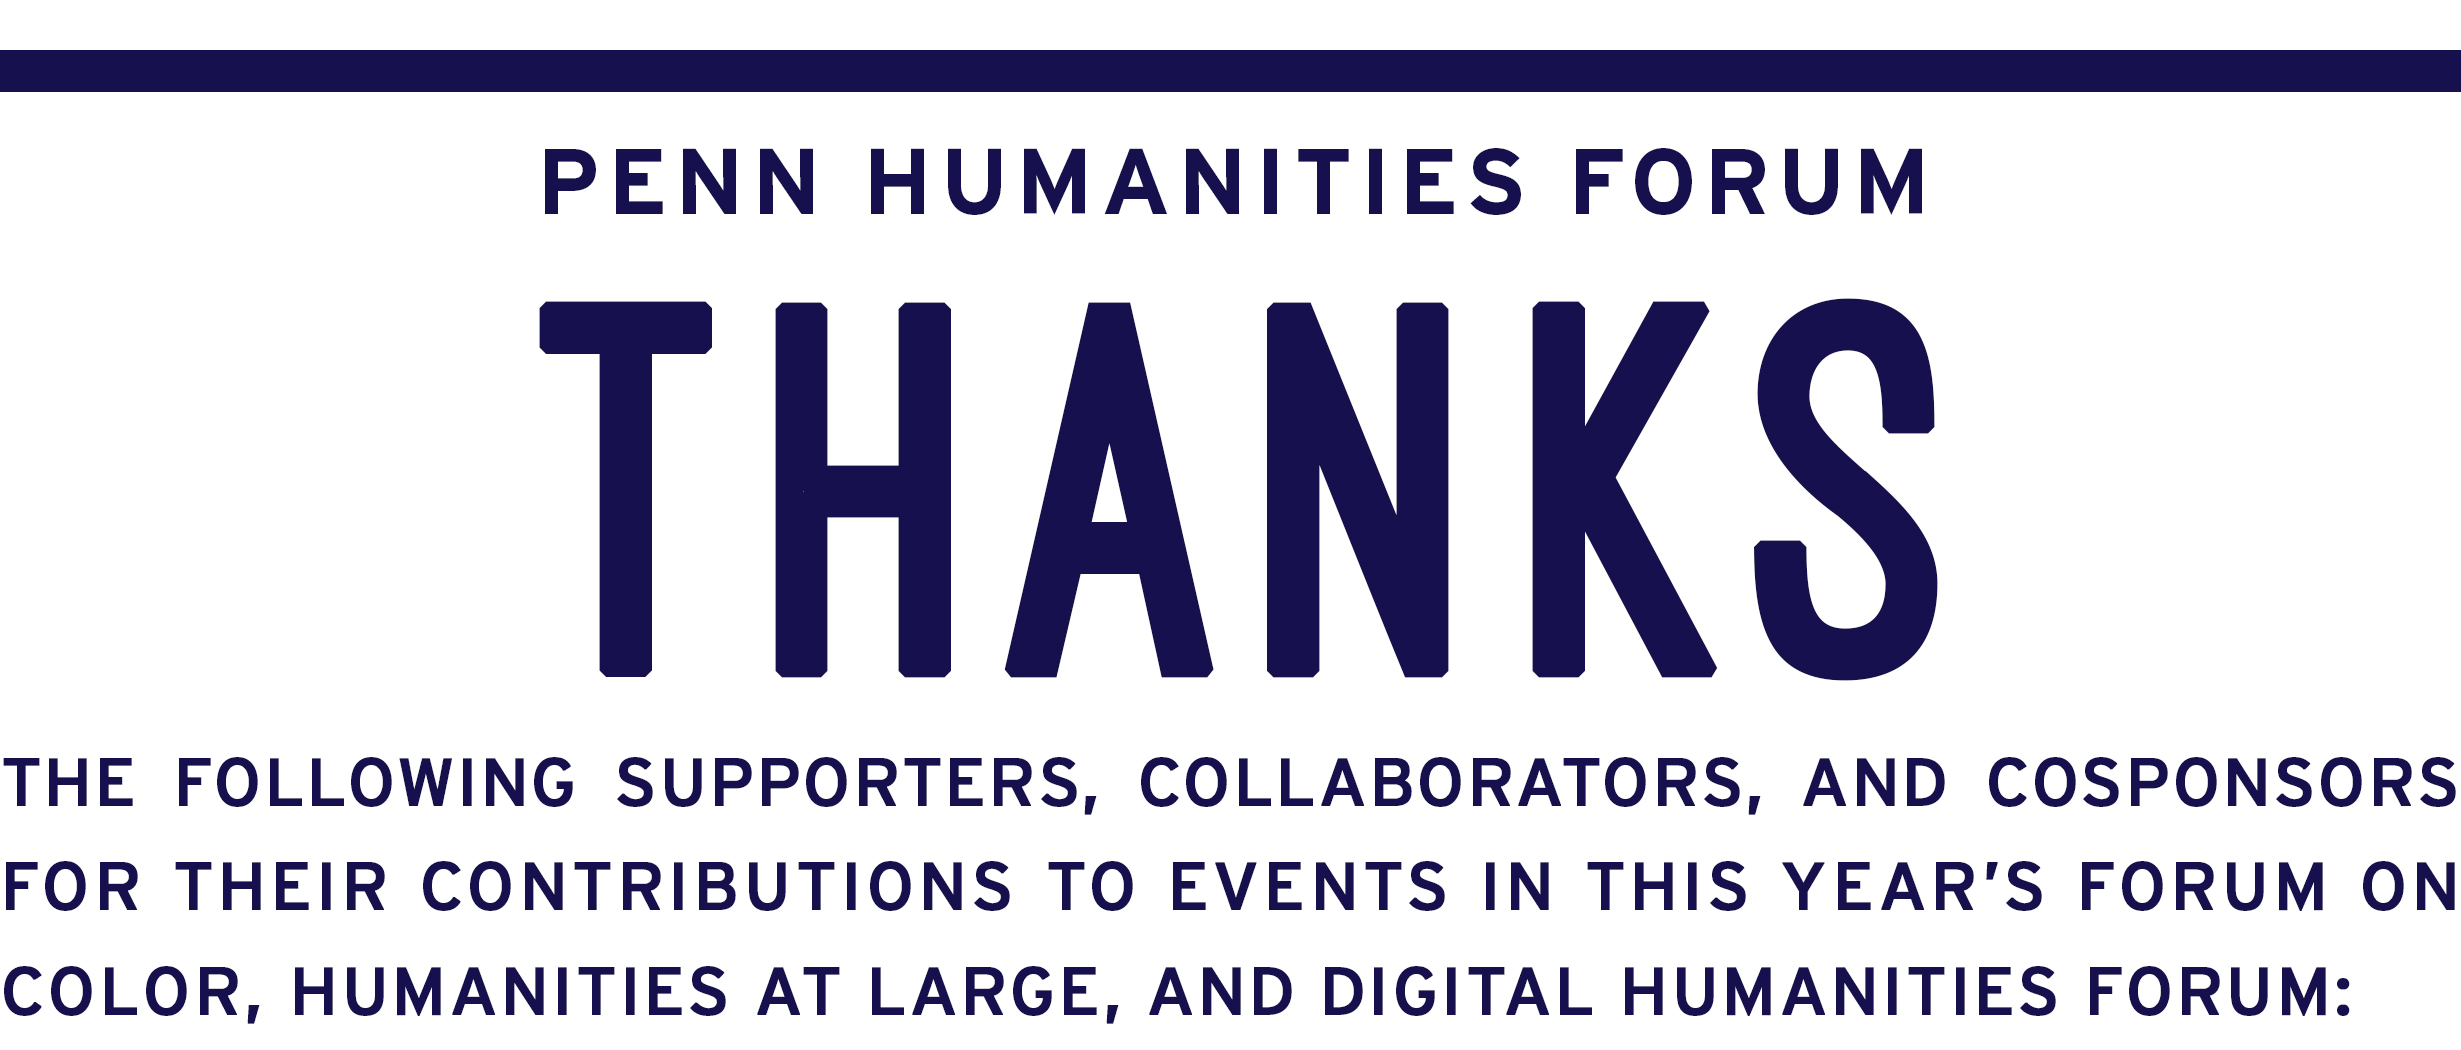 Penn Humanities Forum THANKS